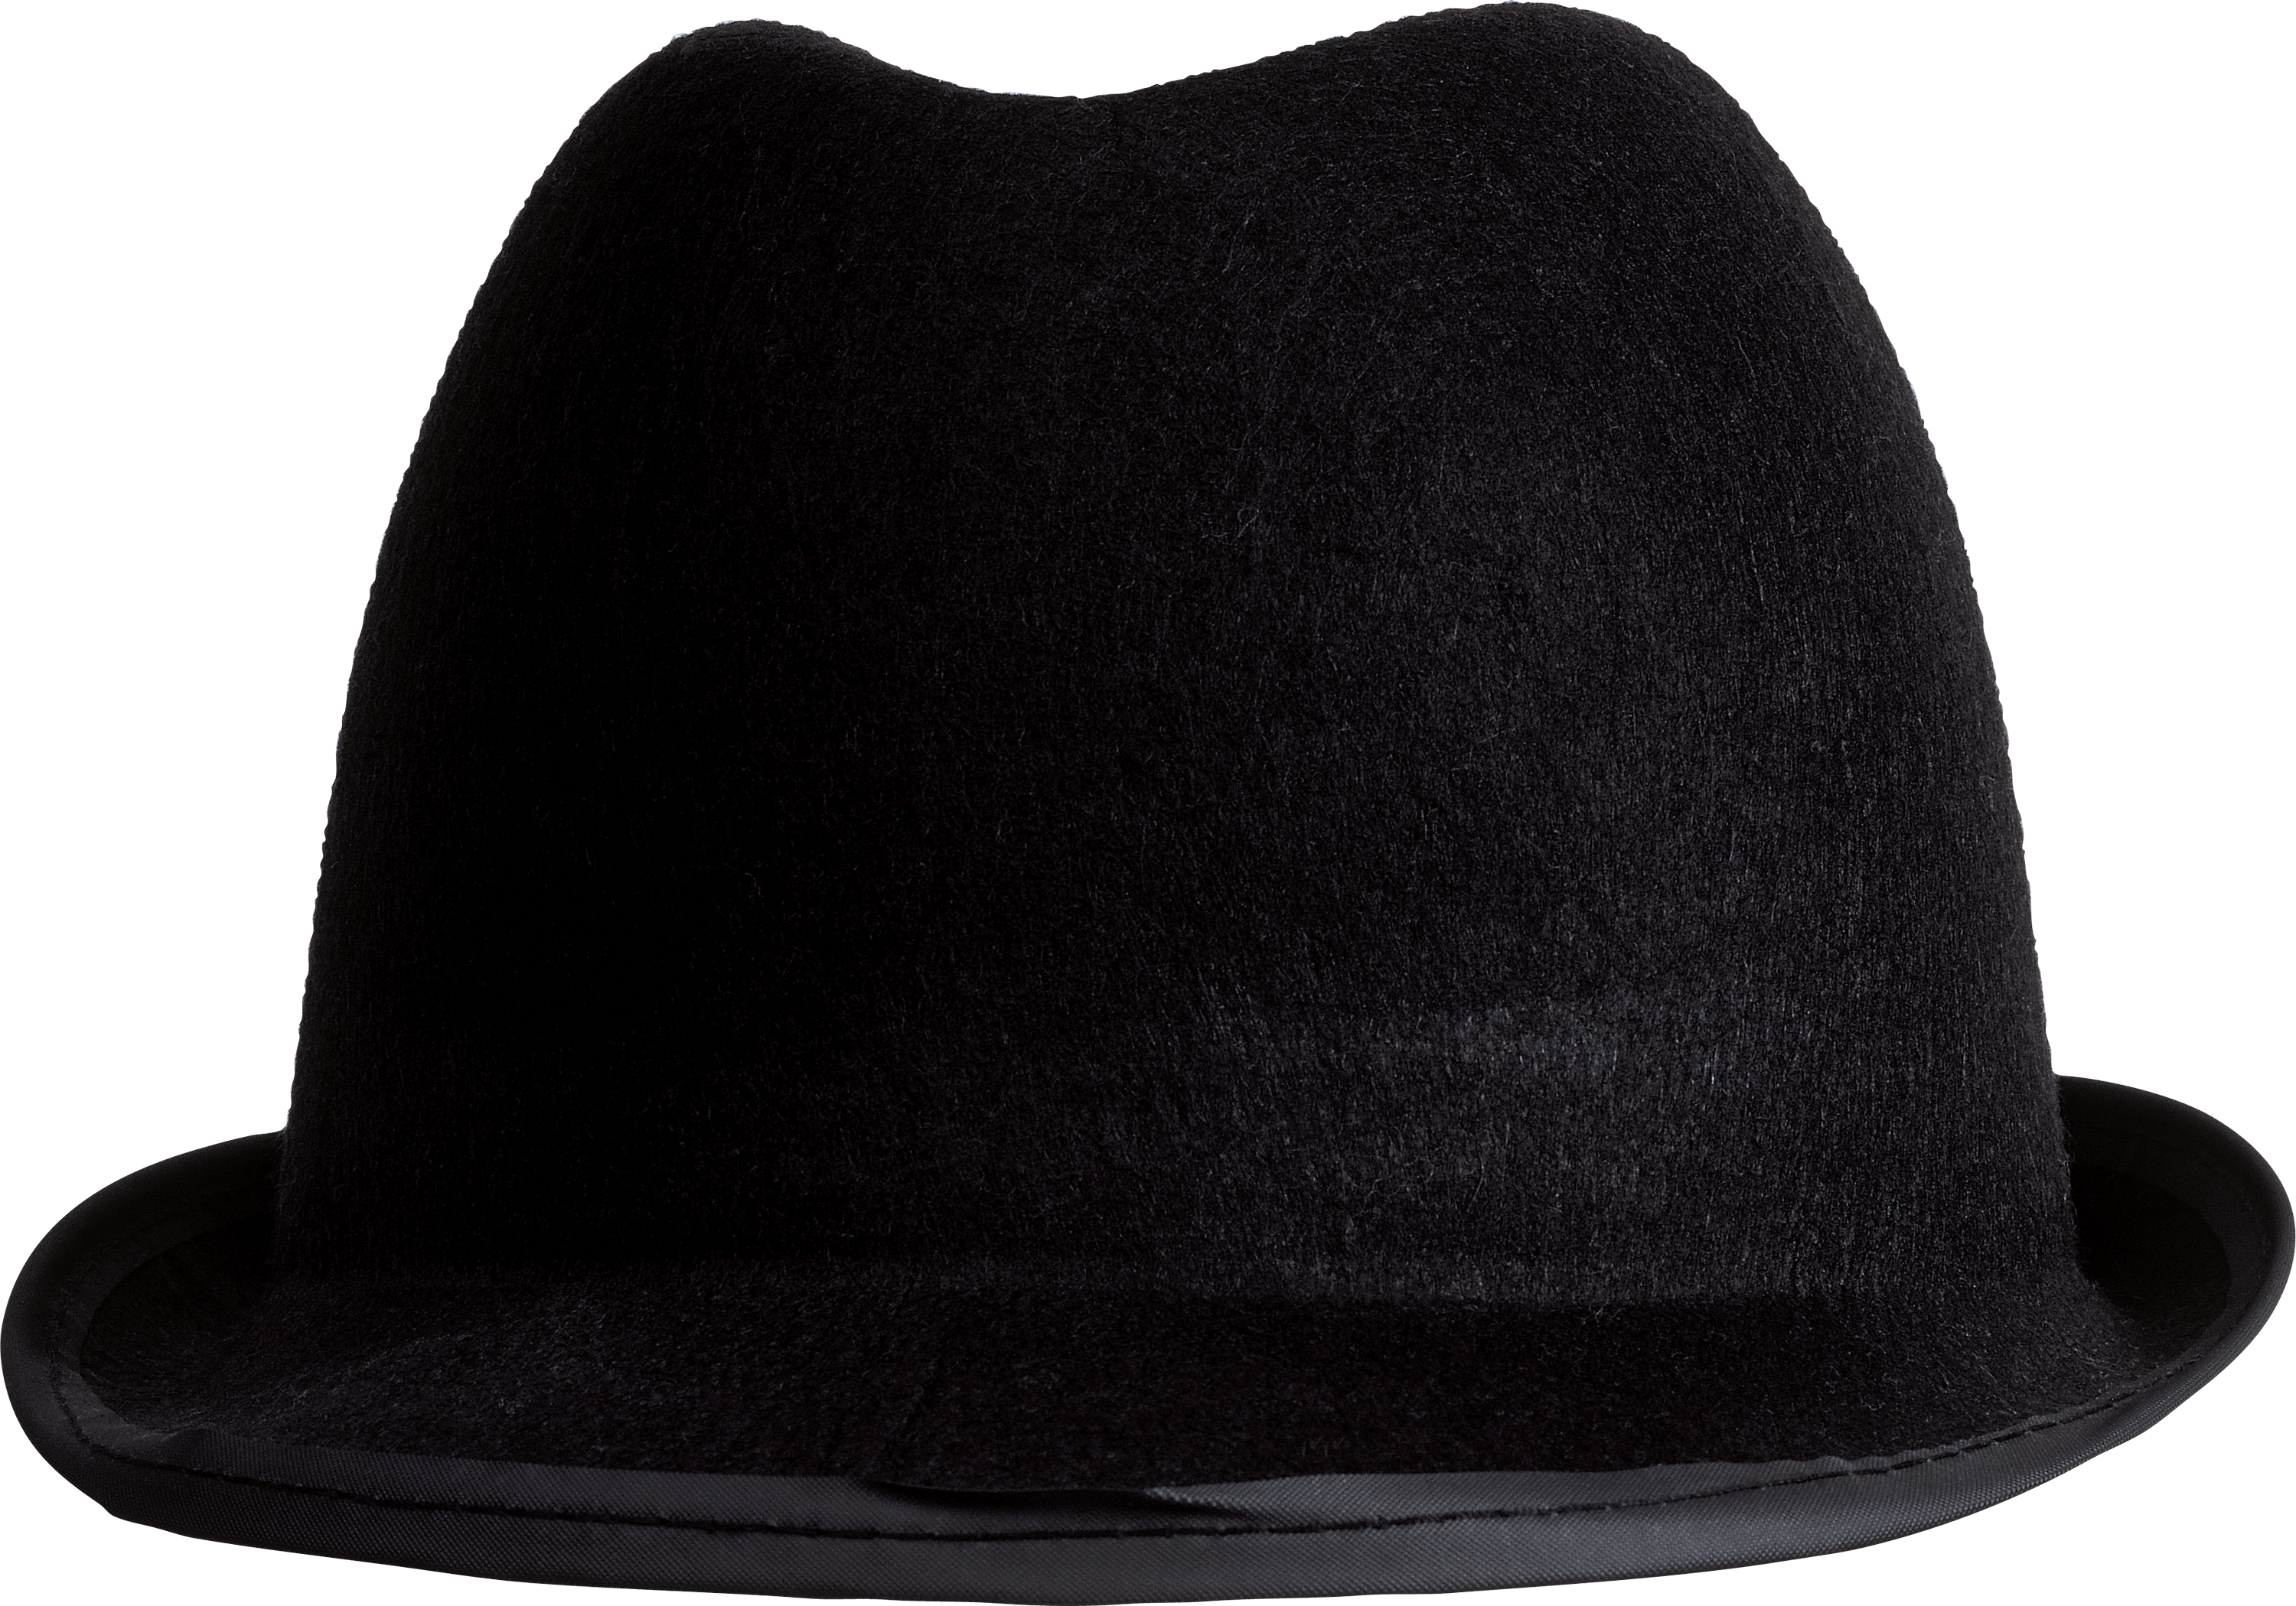 Шляпа. Шляпа черная. Мужская шляпа на прозрачном фоне. Шляпа "котелок" черная. Hat ihn